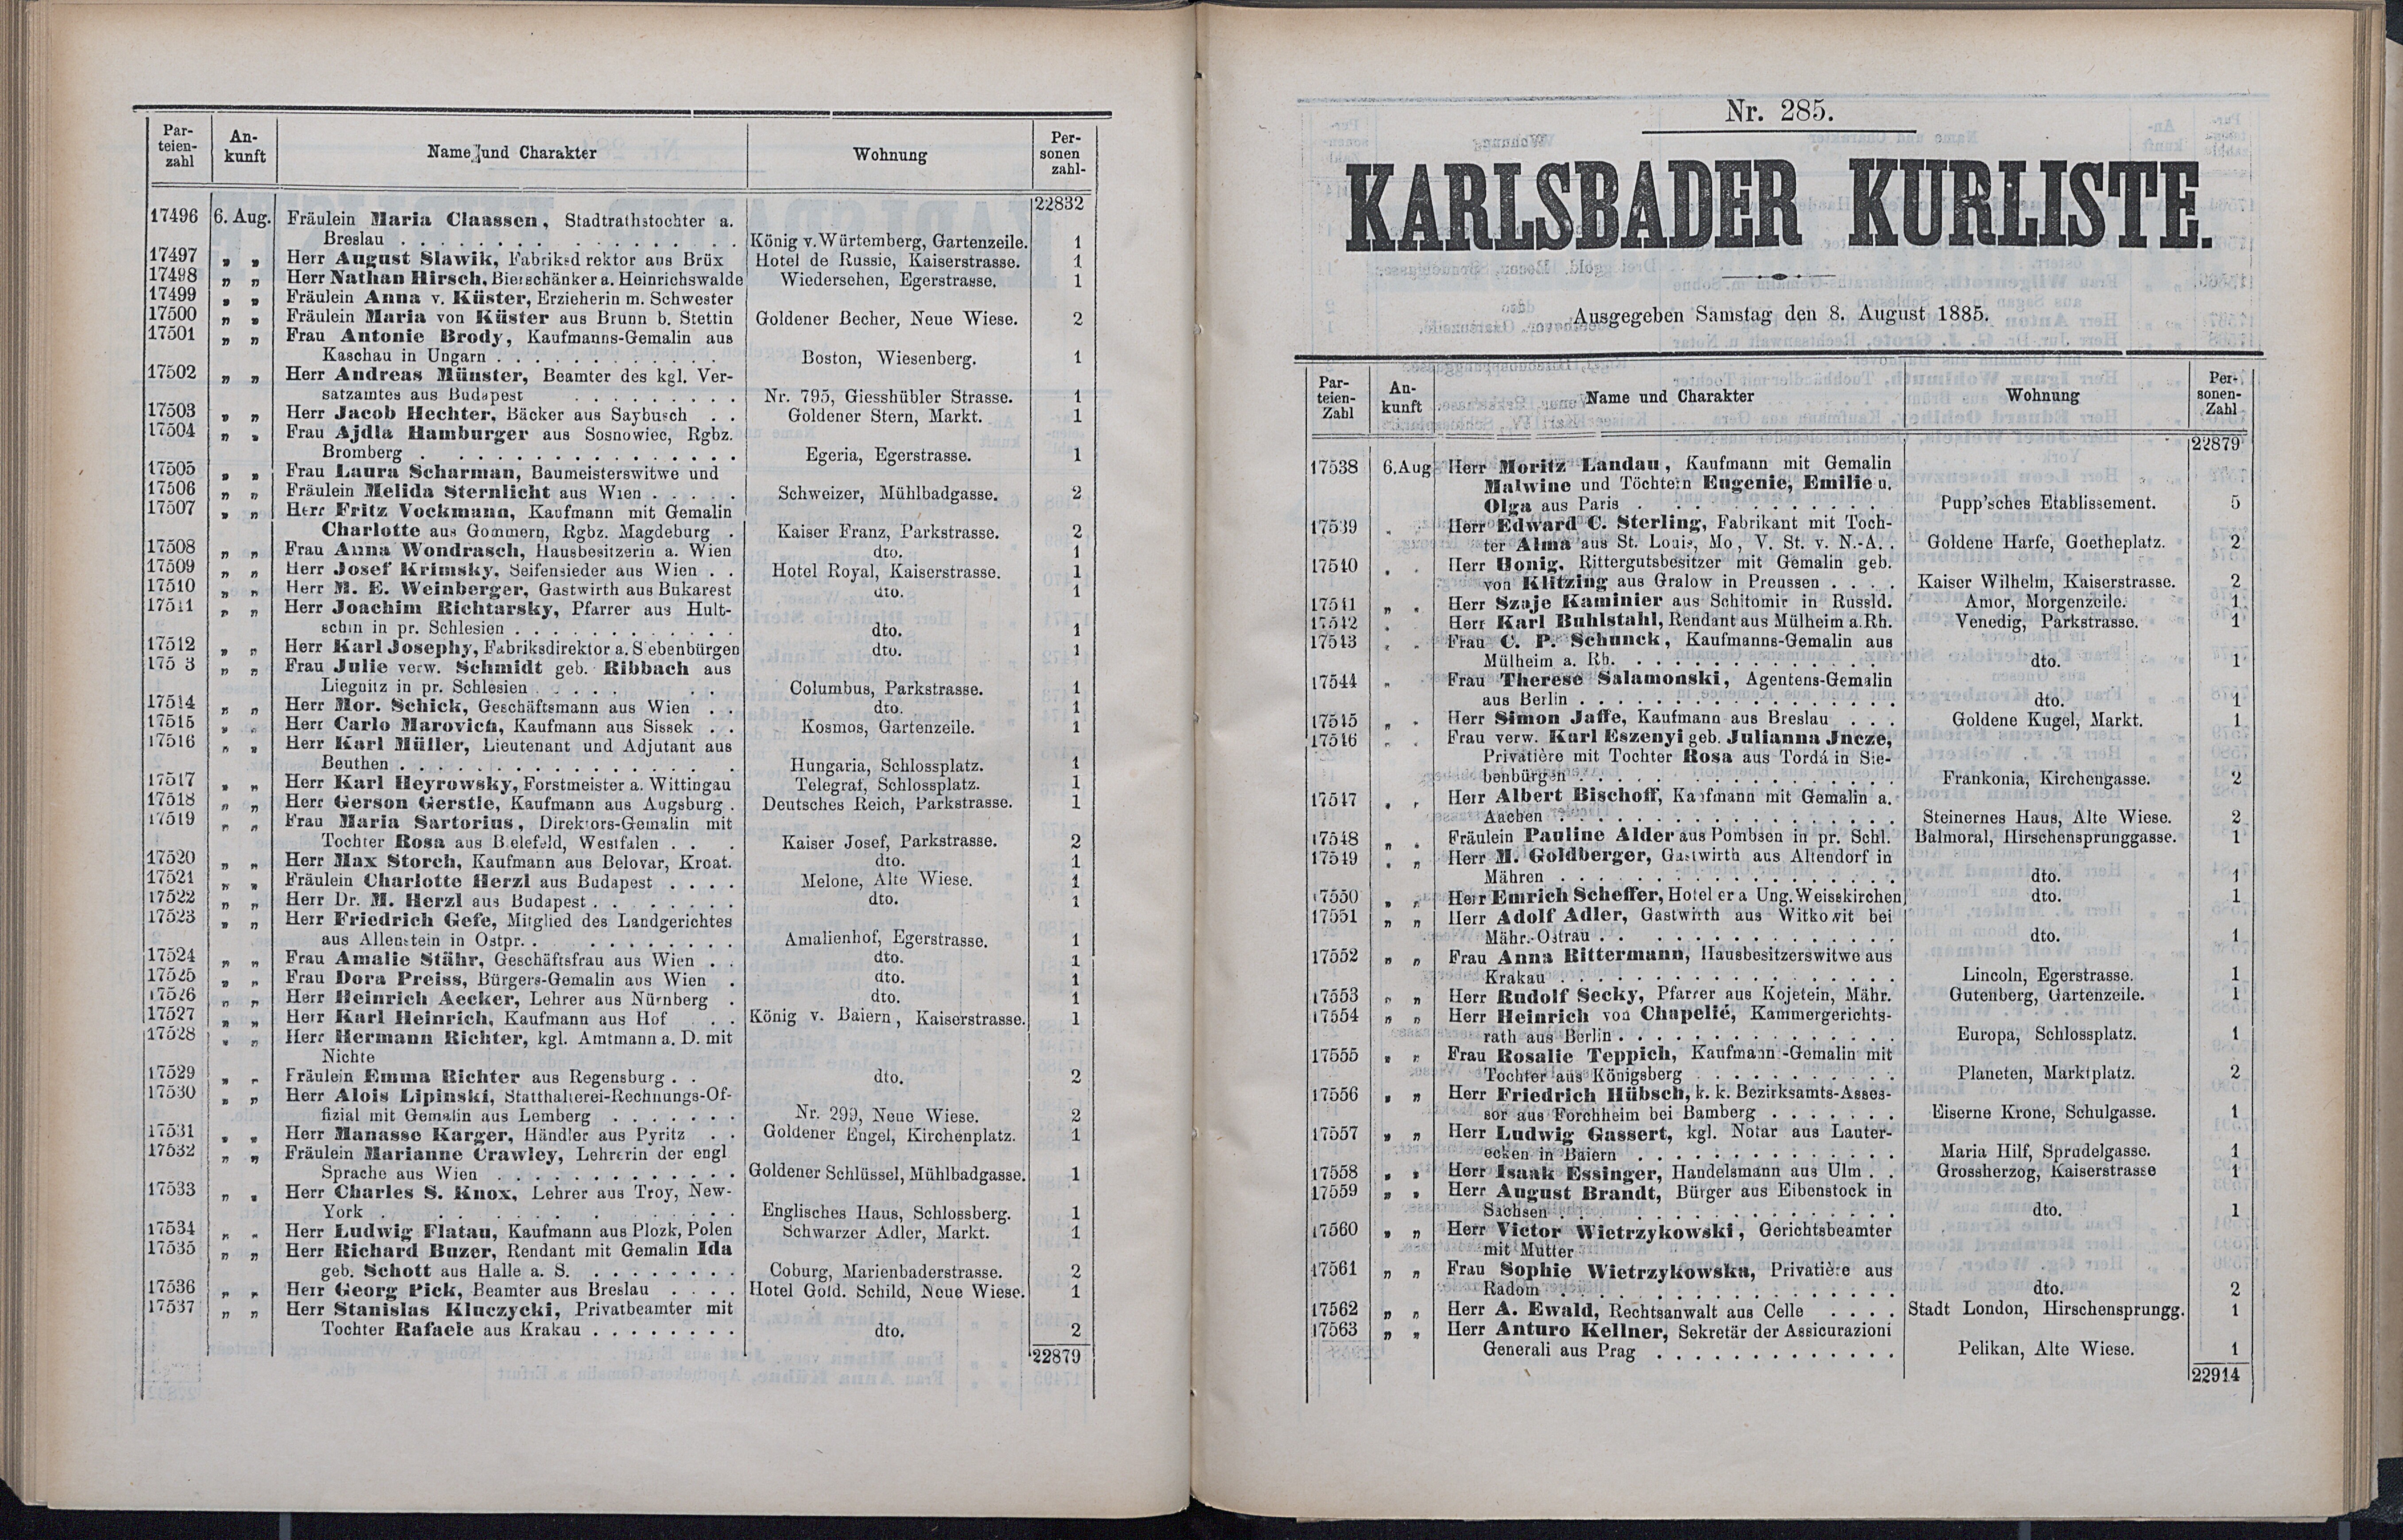 337. soap-kv_knihovna_karlsbader-kurliste-1885_3380